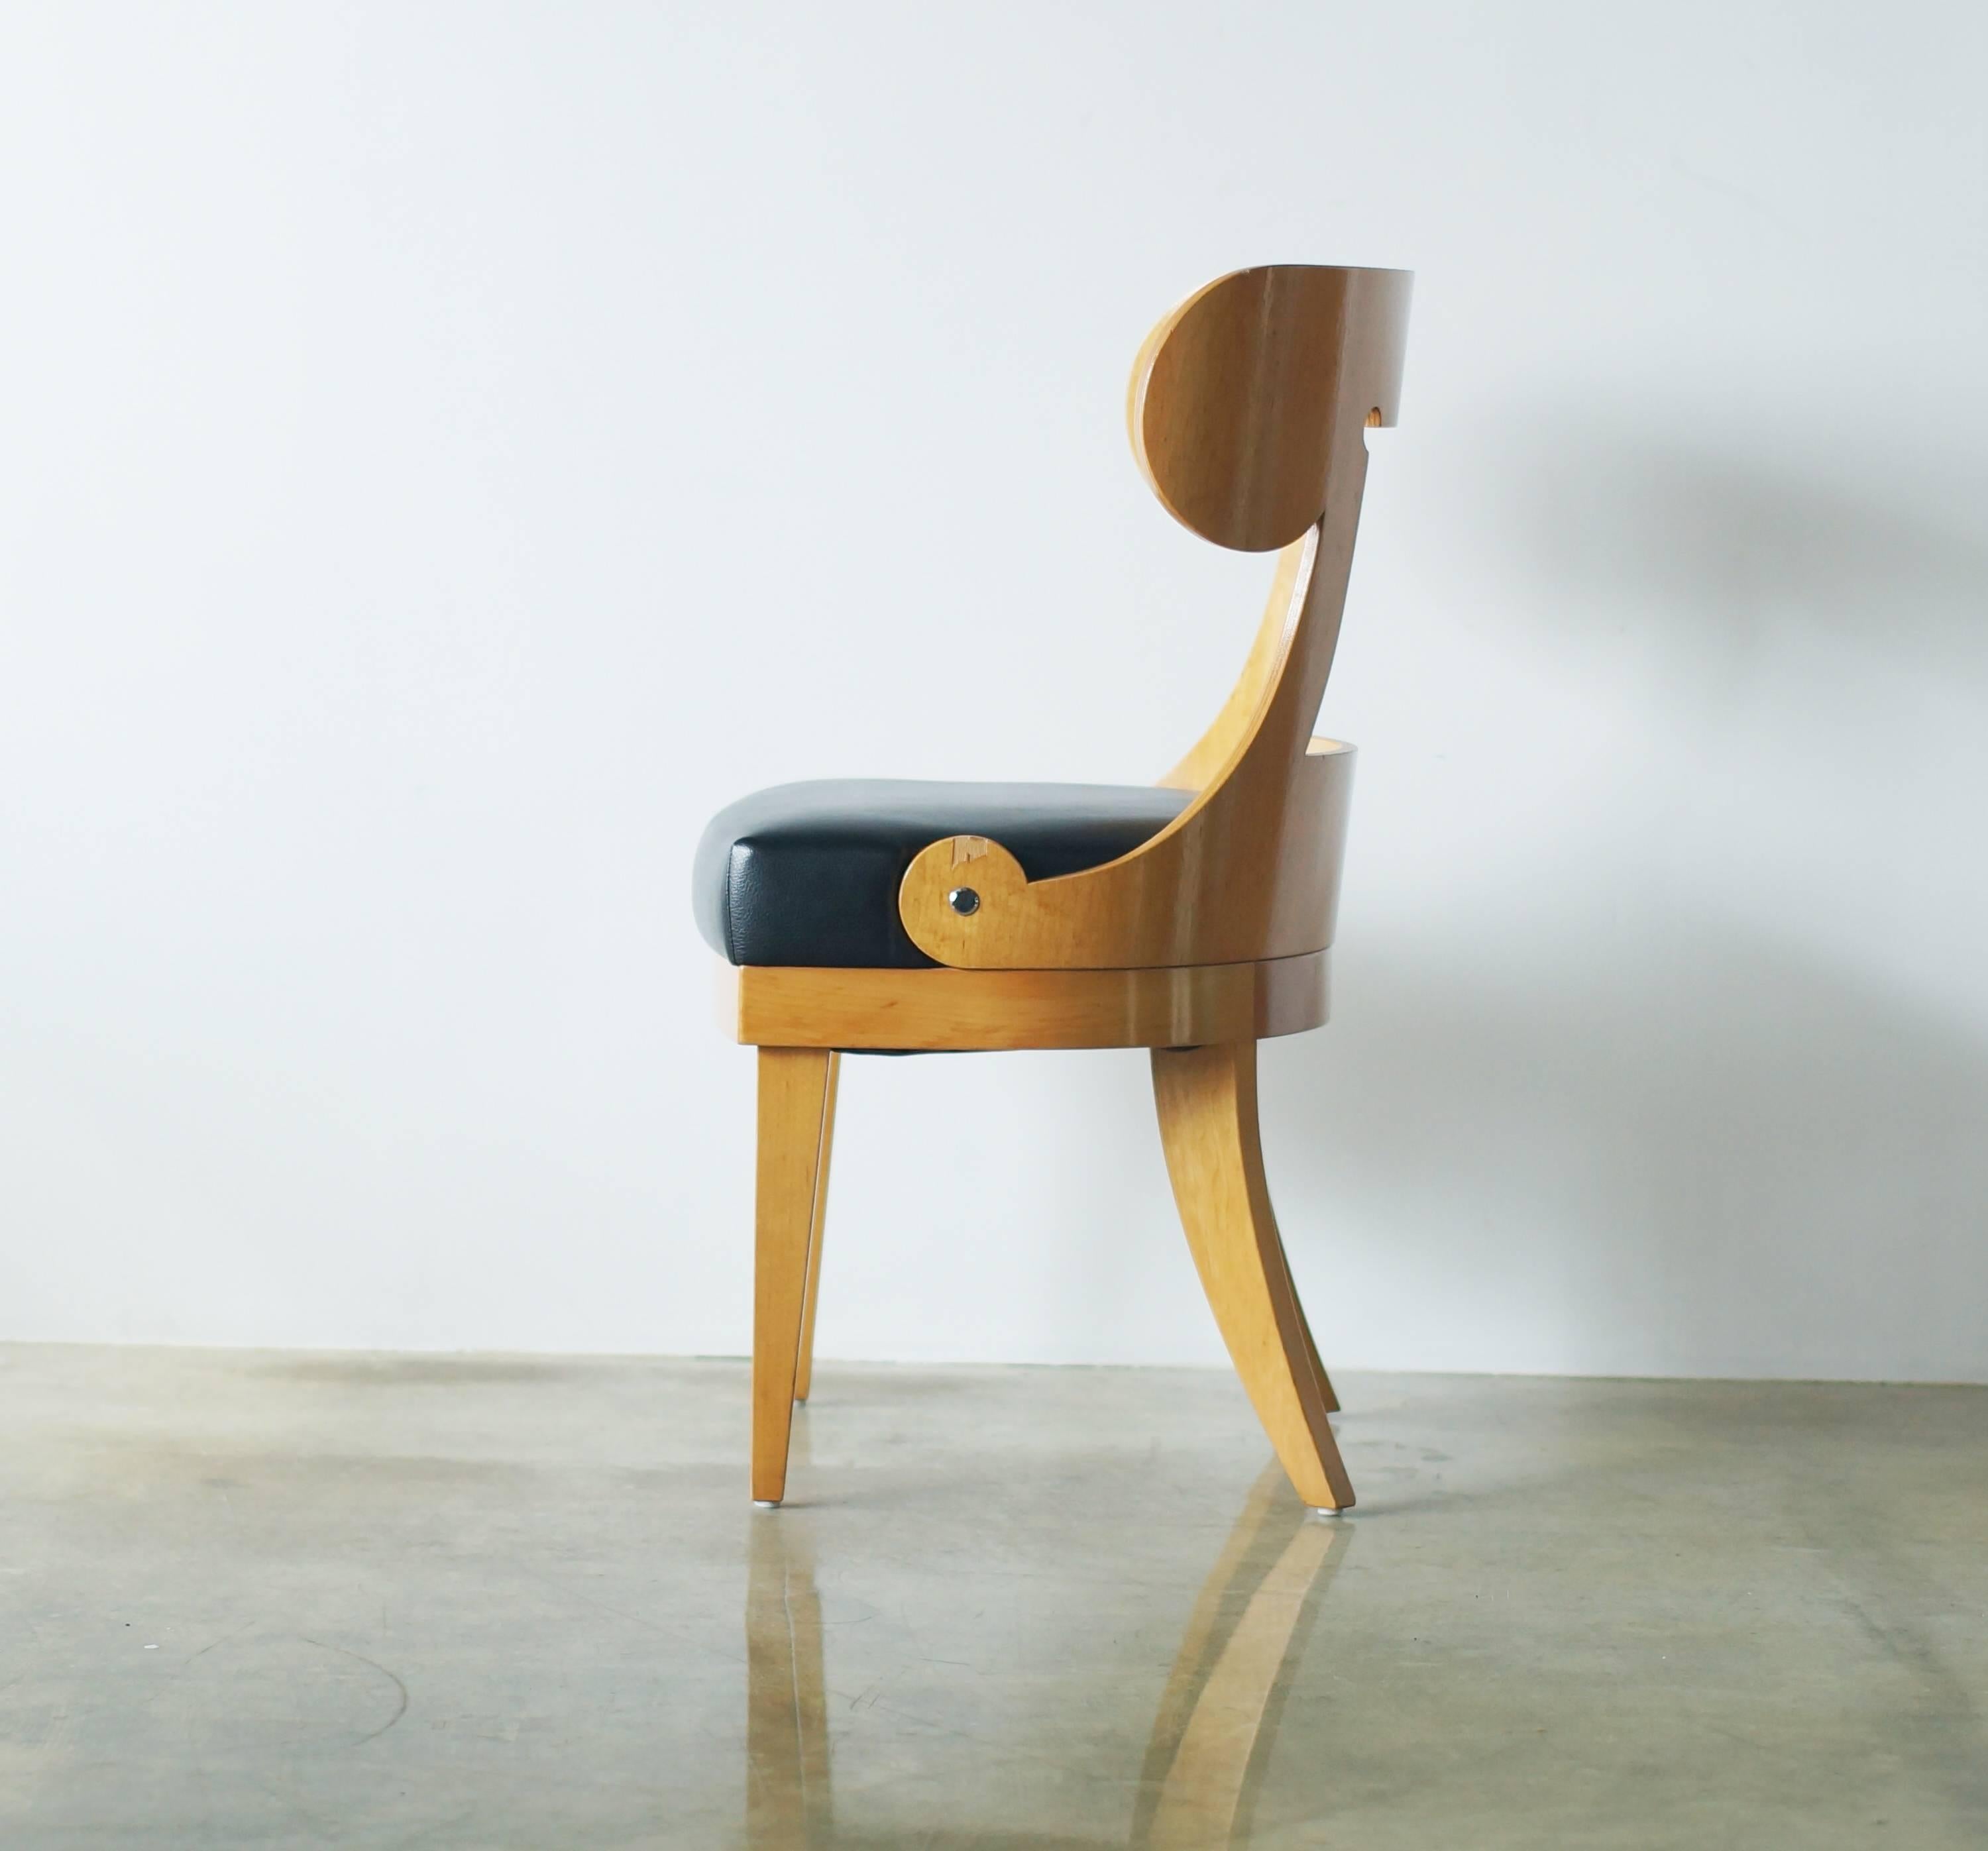 Japanese Kanji Ueki Prototype Chairs Dino and Dina Postmodern Classic Style